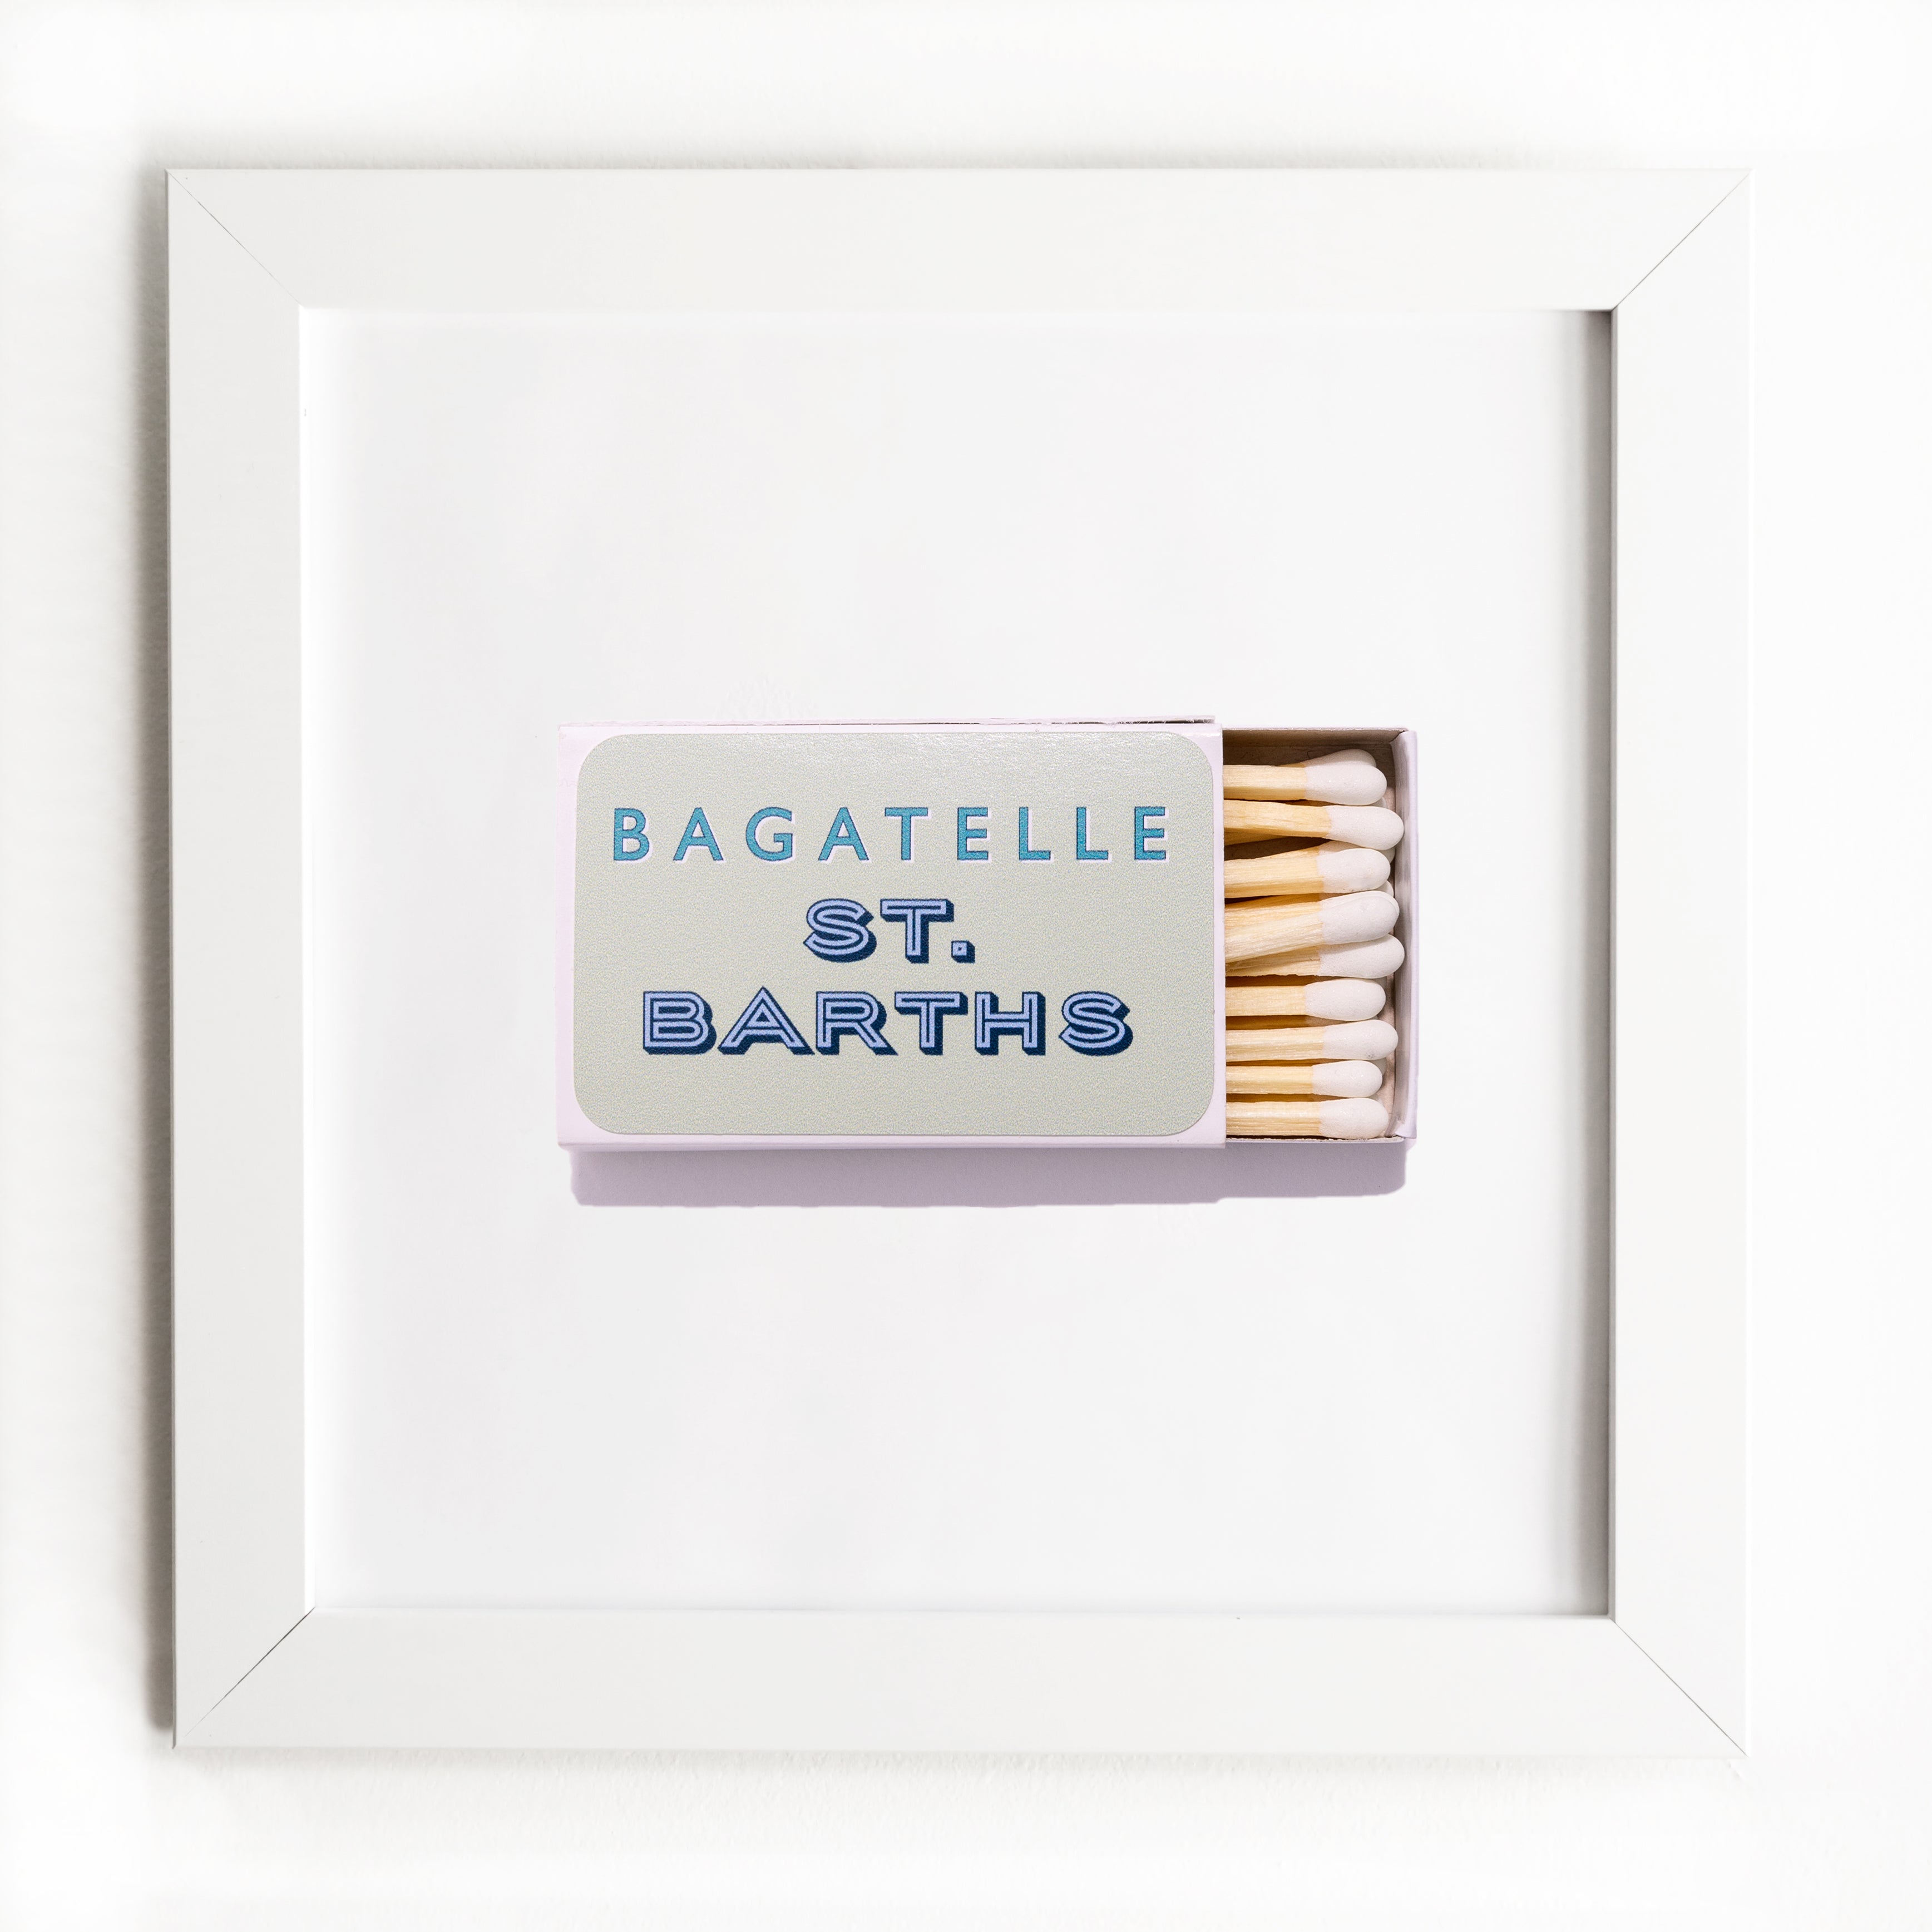 Bagatelle St Barths – Match South Shop